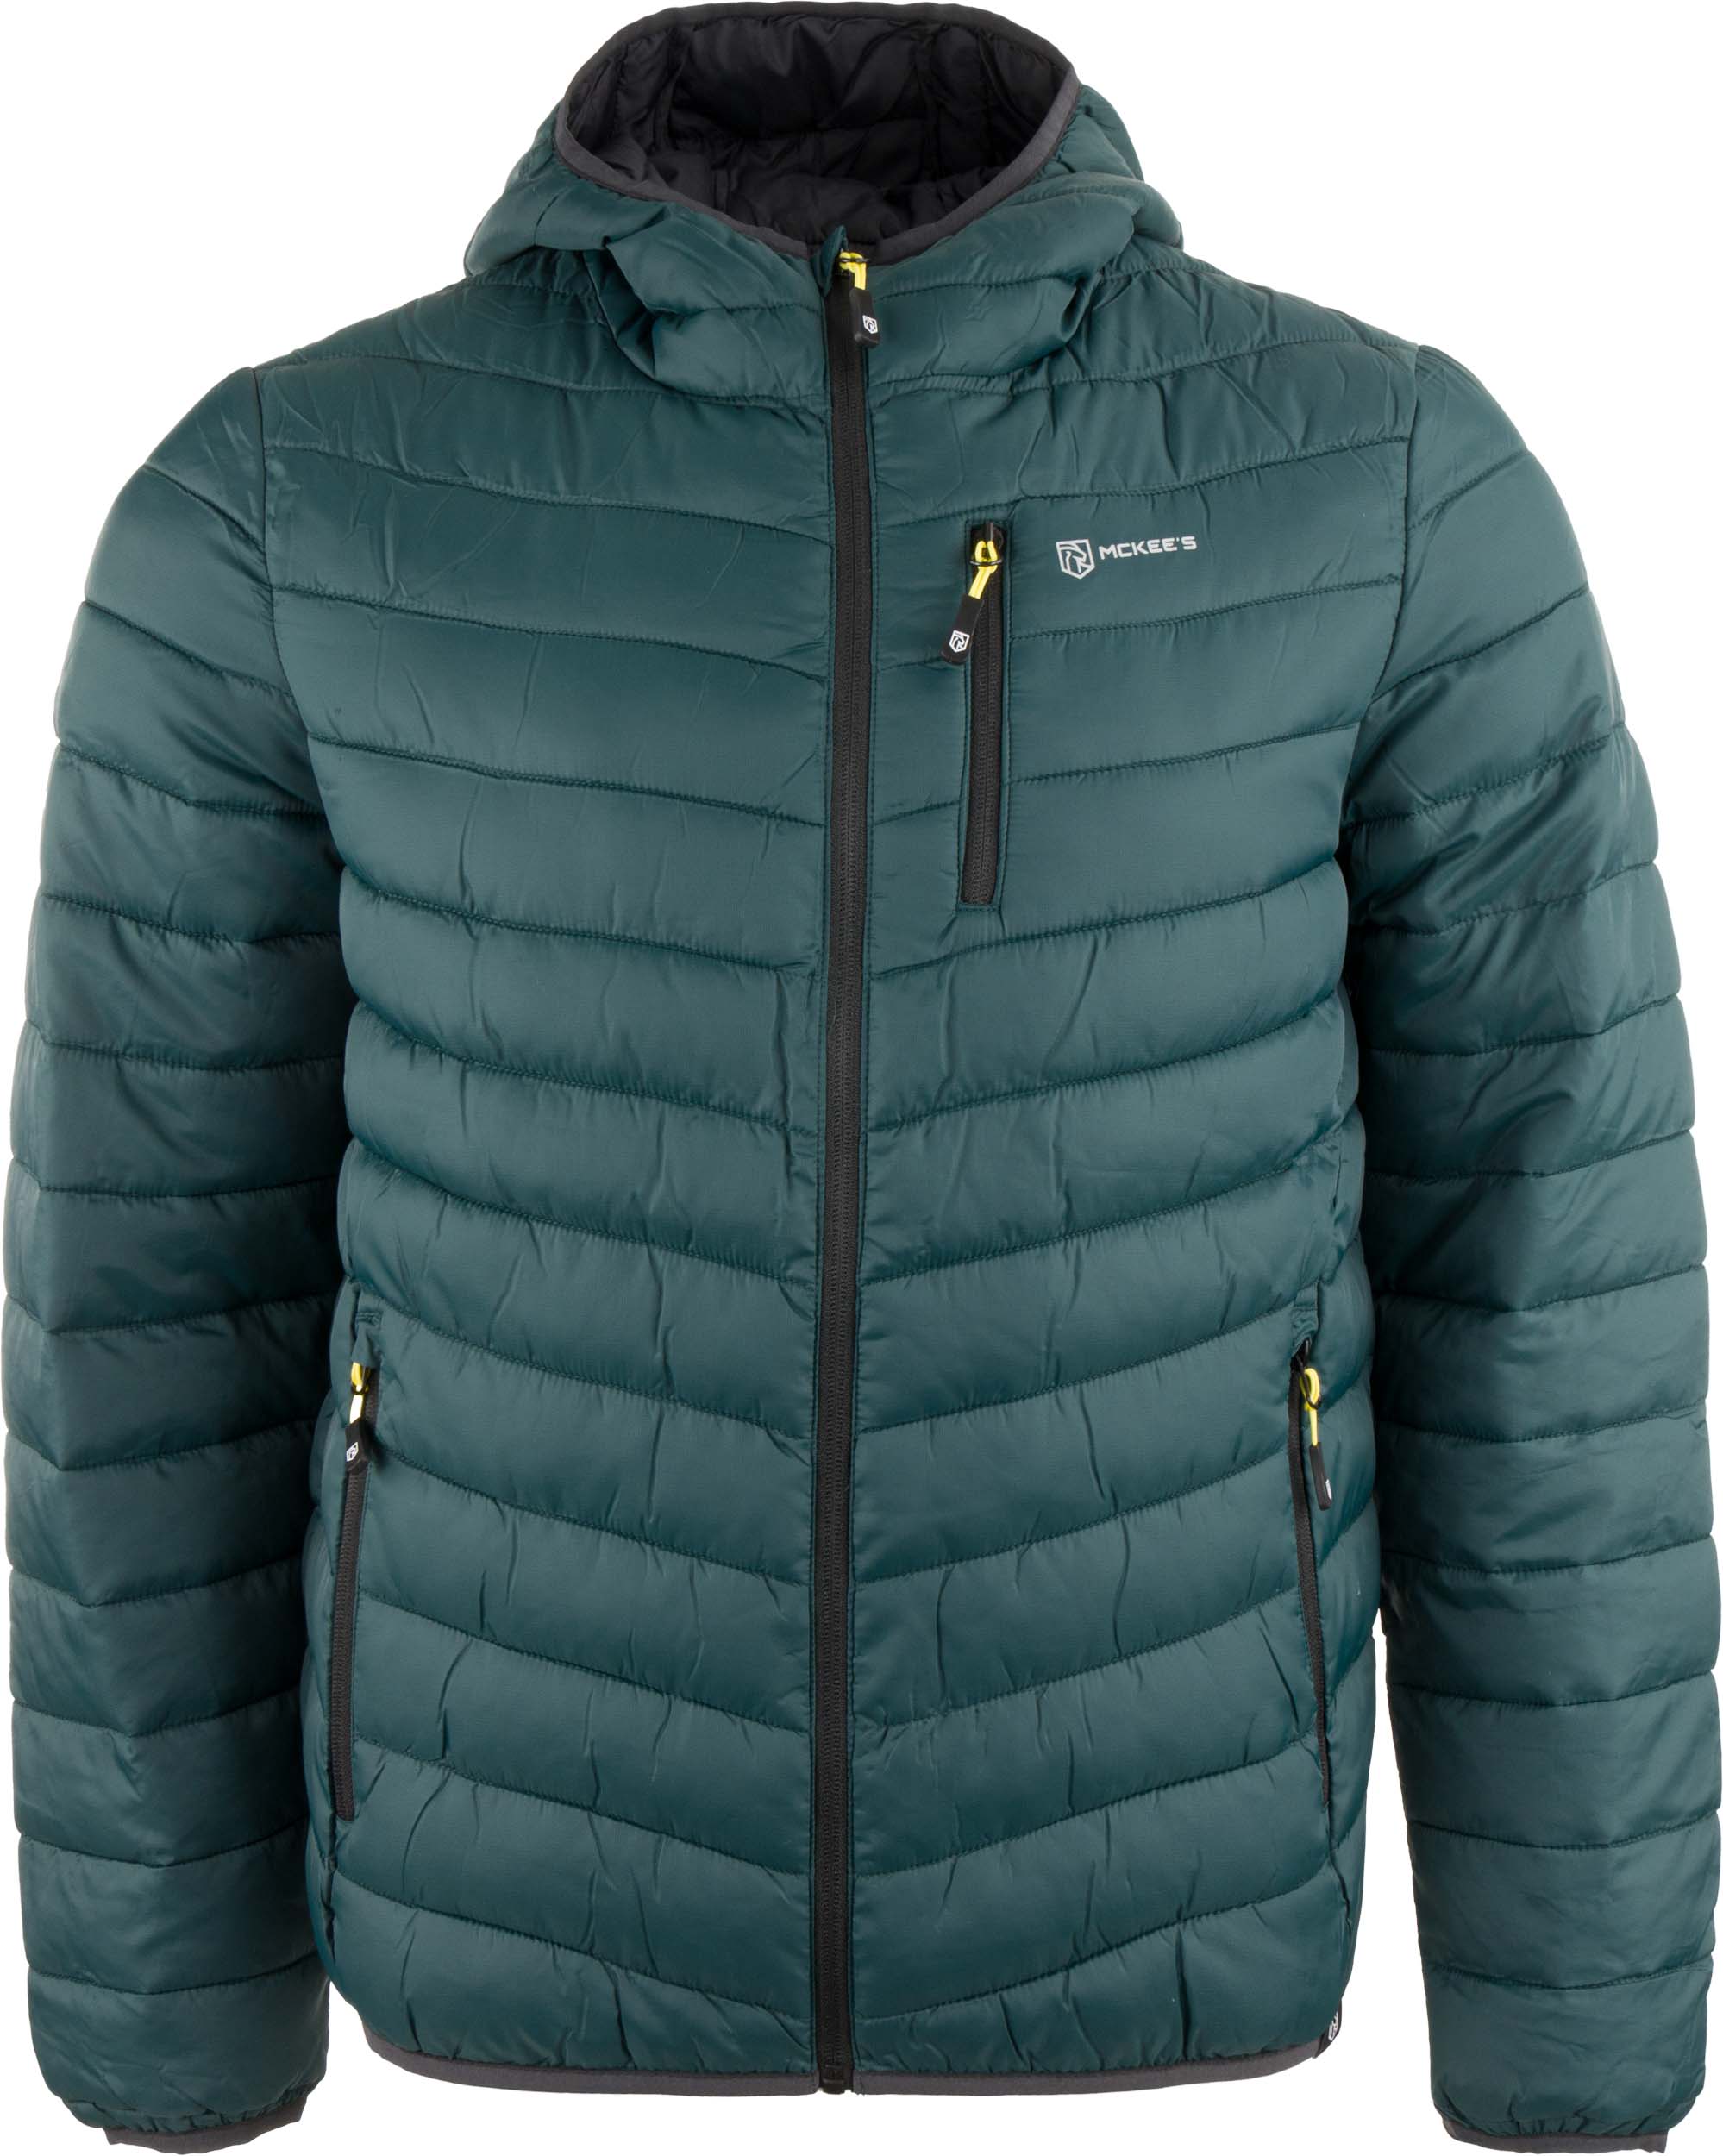 Pánská zimní bunda Mckees Fiordi Dark Green|52-XL